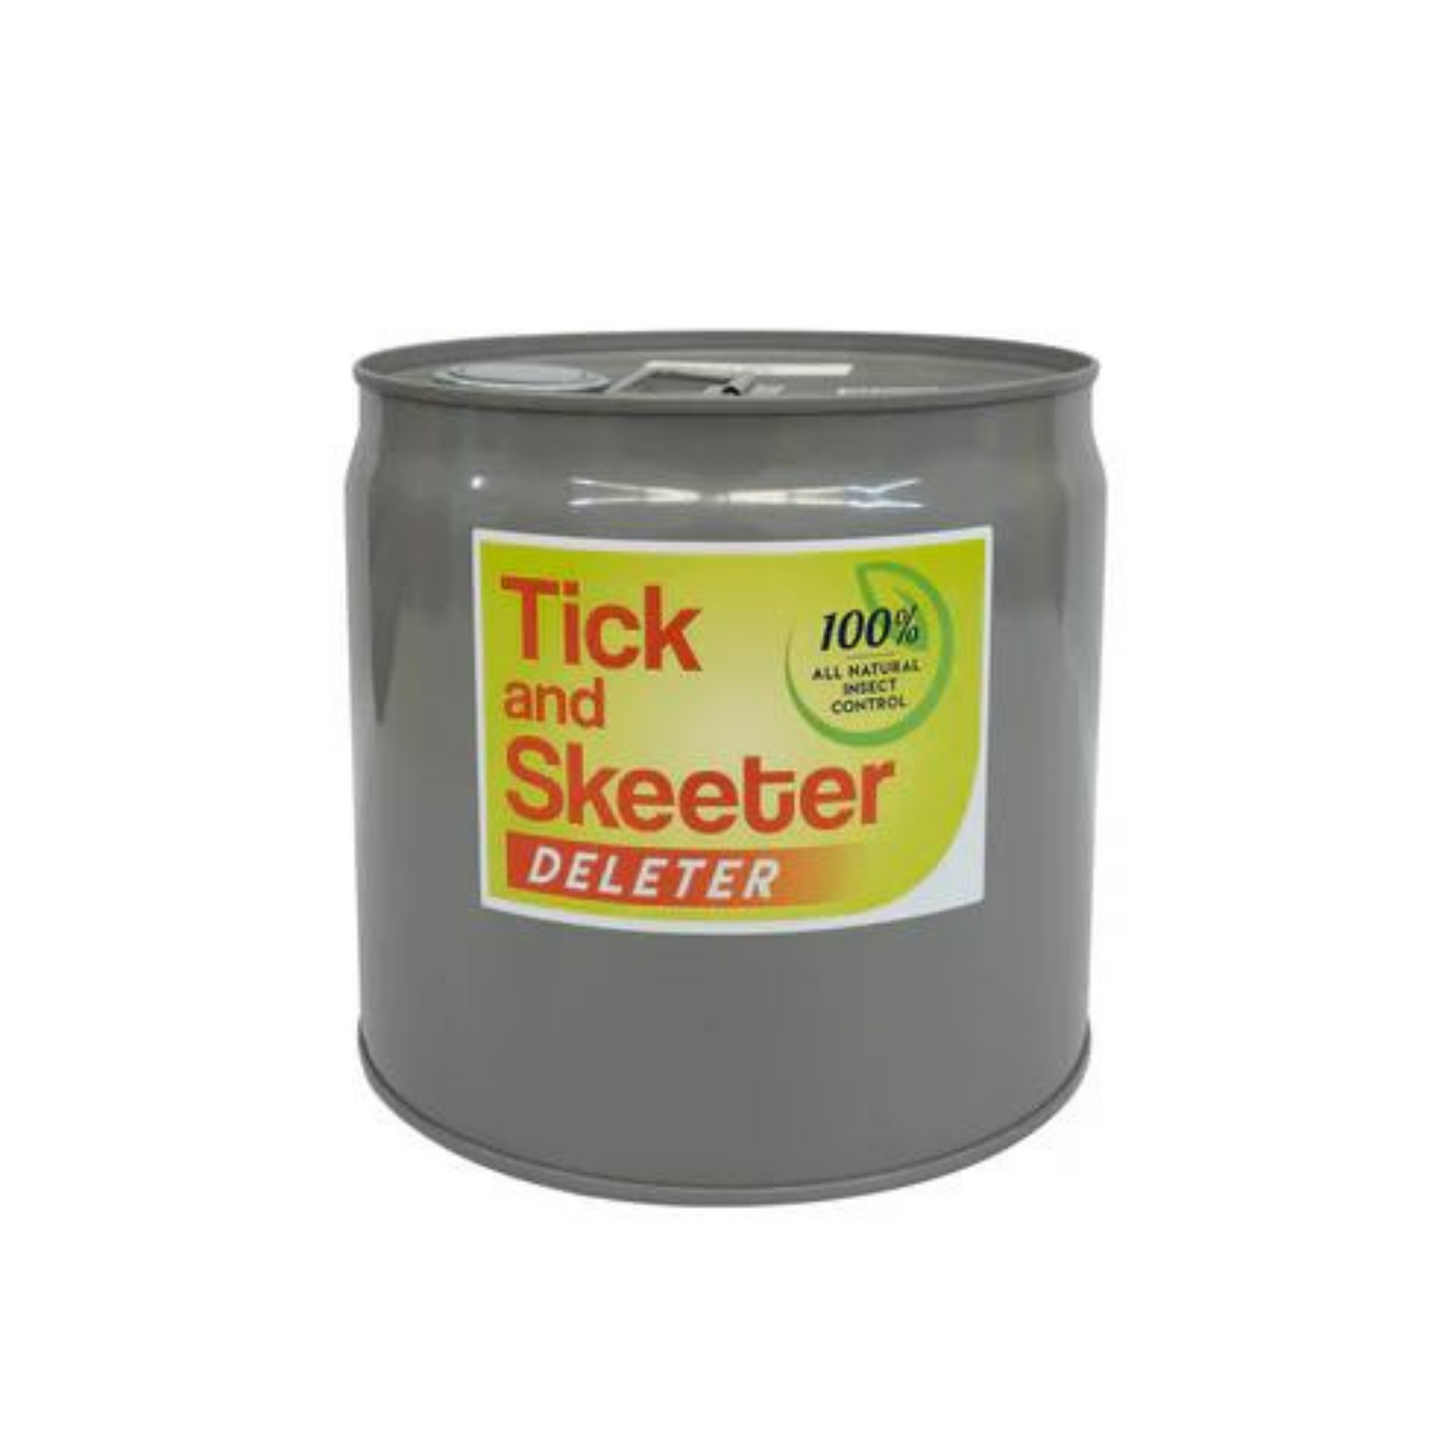 Tick and Skeeter Deleter- 3 Gallon